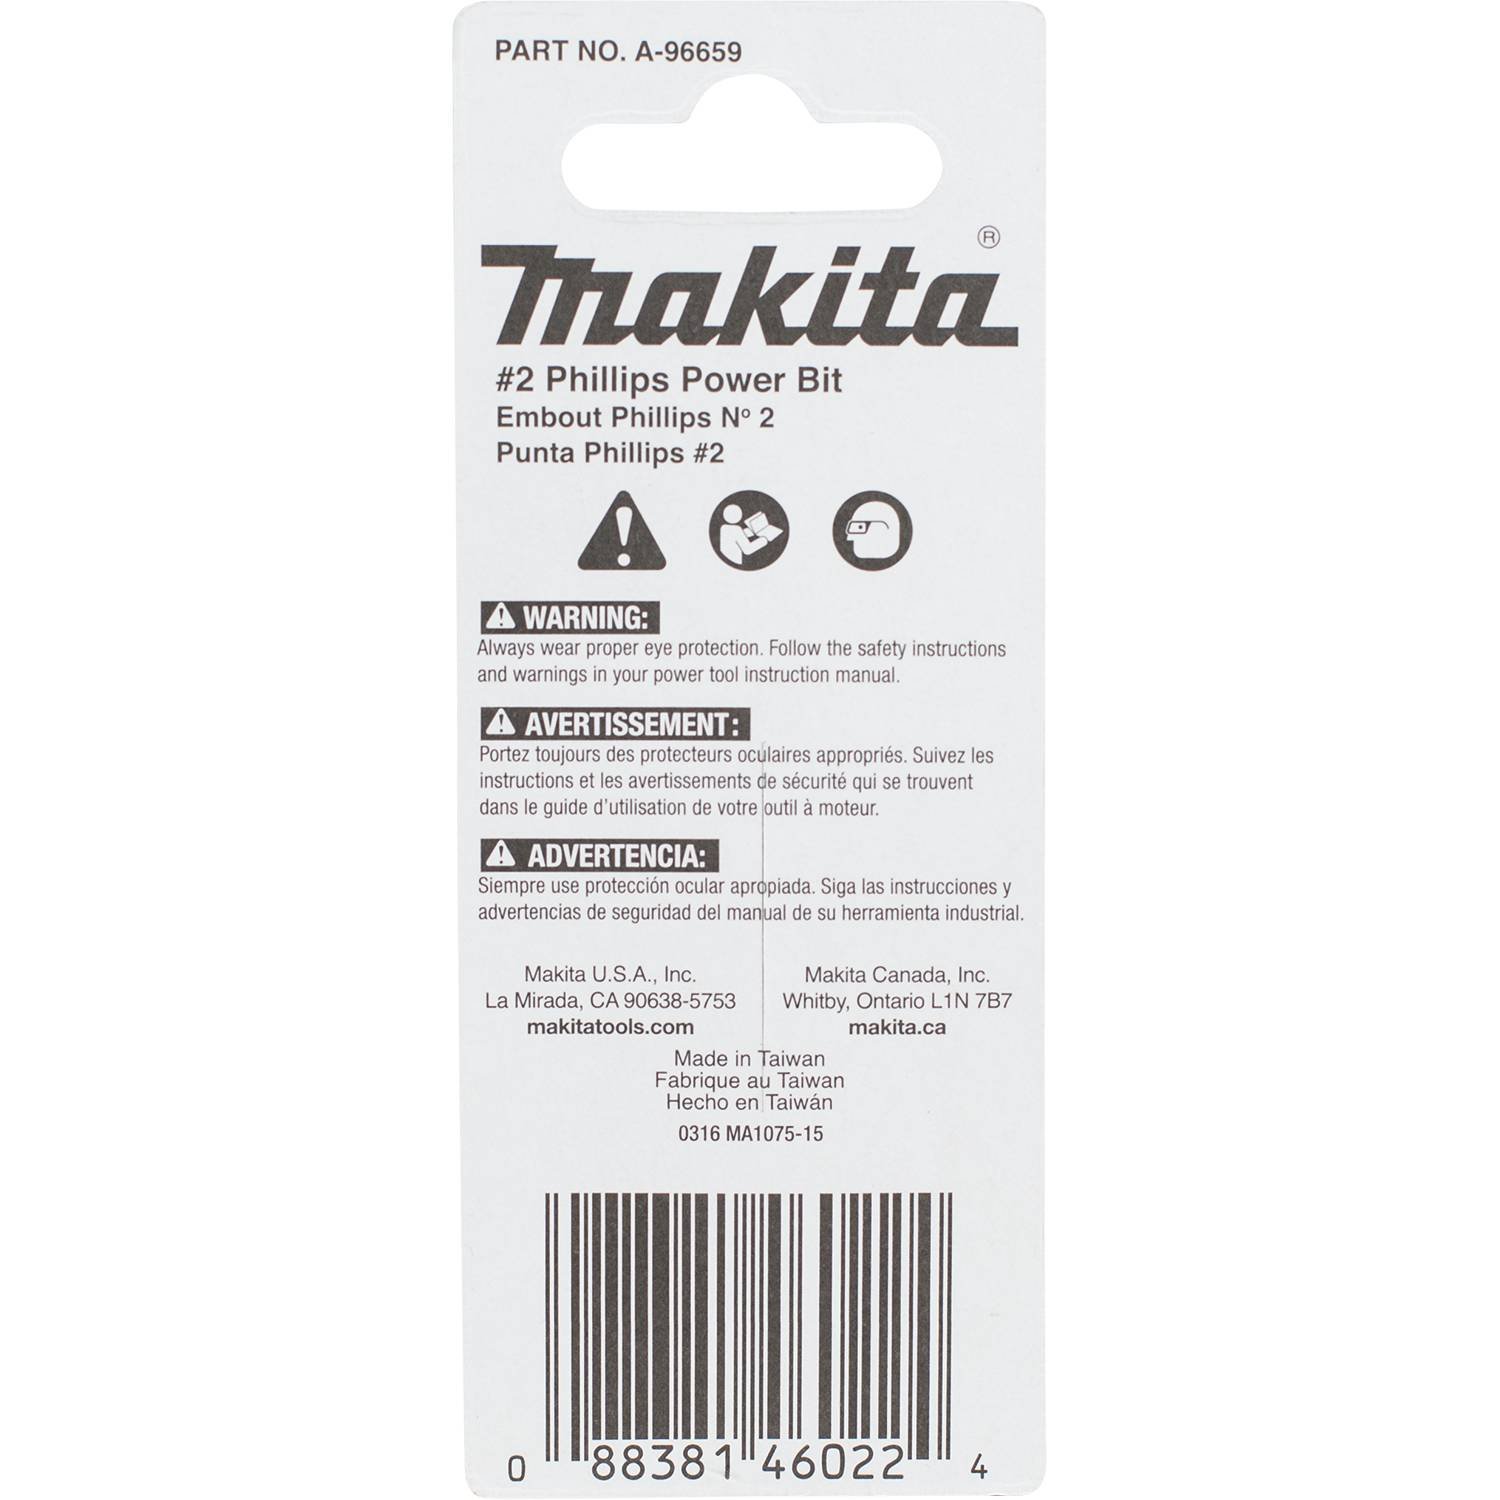 Makita A-96659 Impactx 2 Phillips 2″ Power Bit, 2 Pack